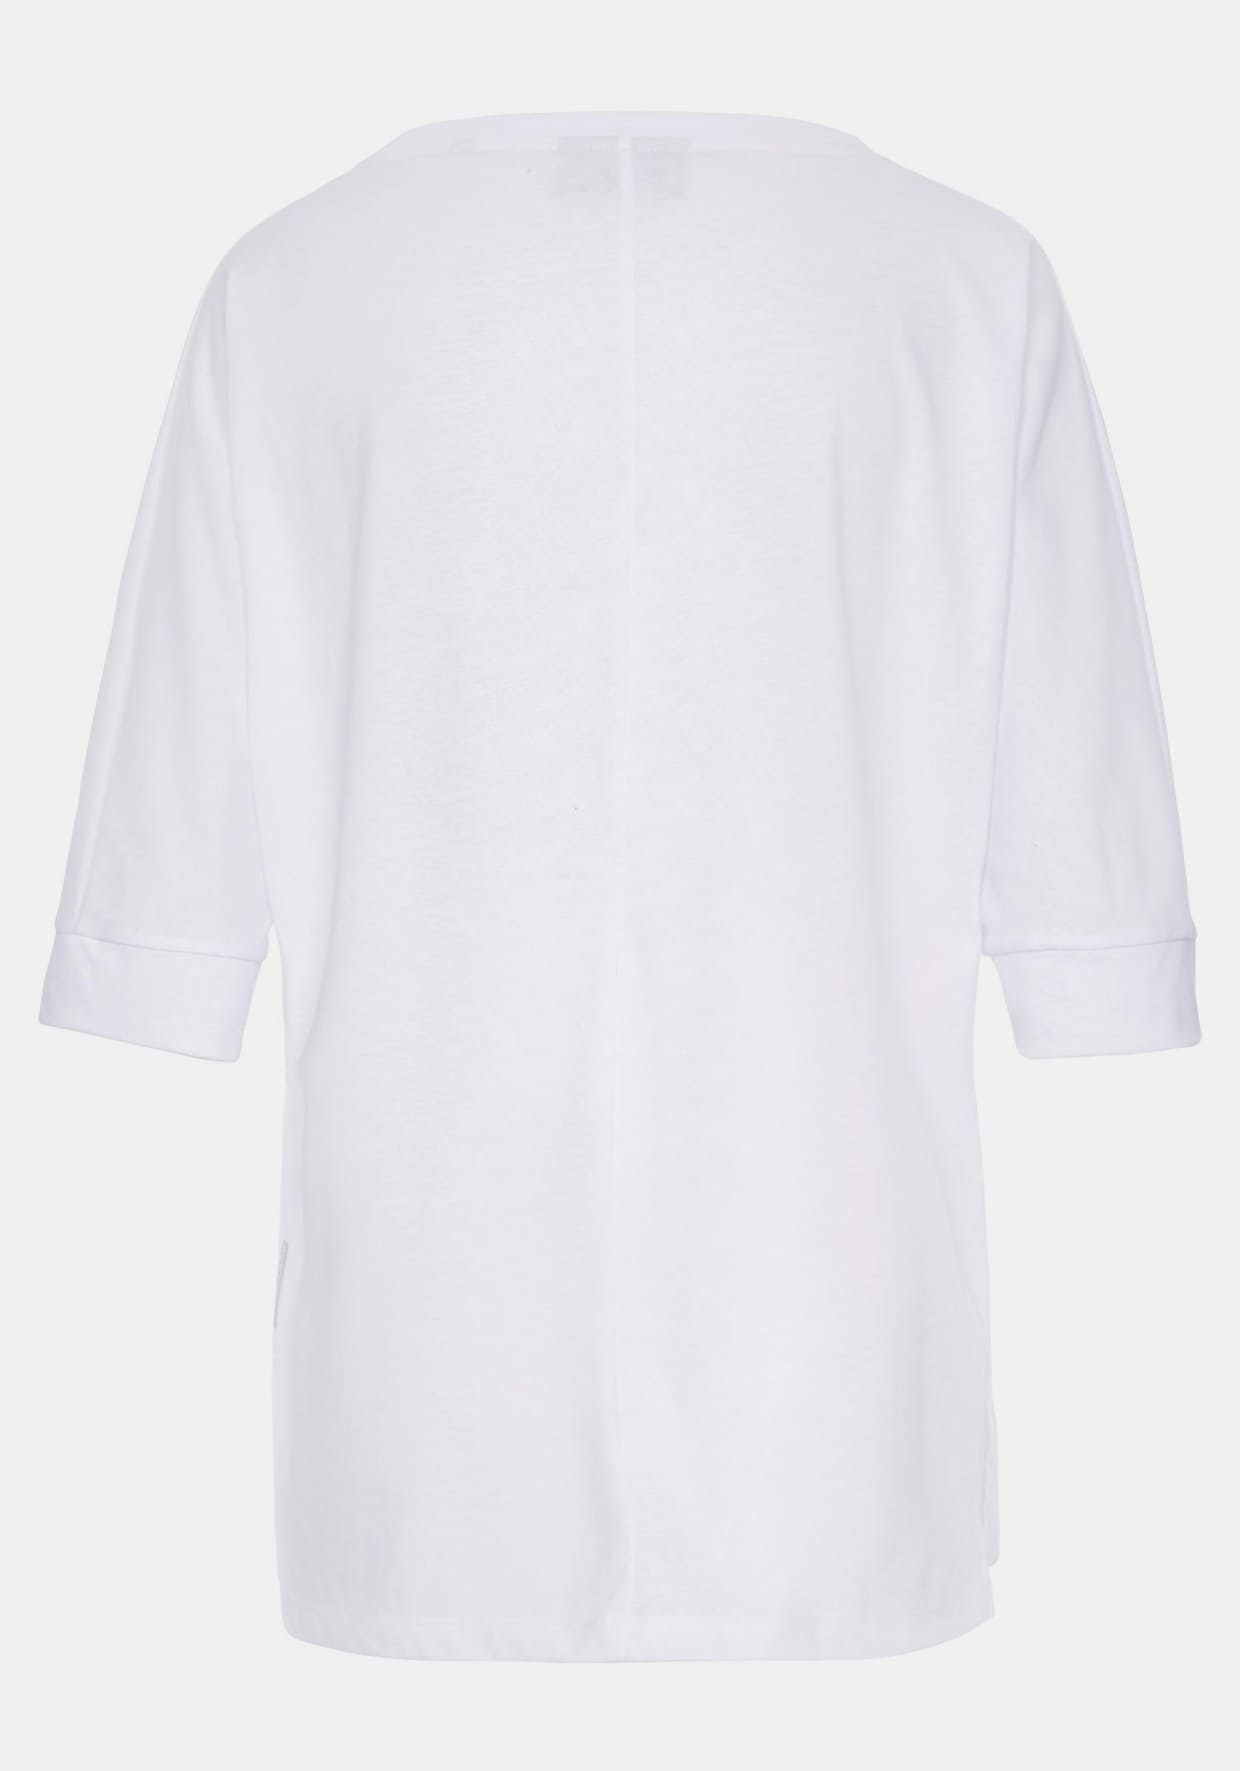 Elbsand 3/4-Arm-Shirt - weiß